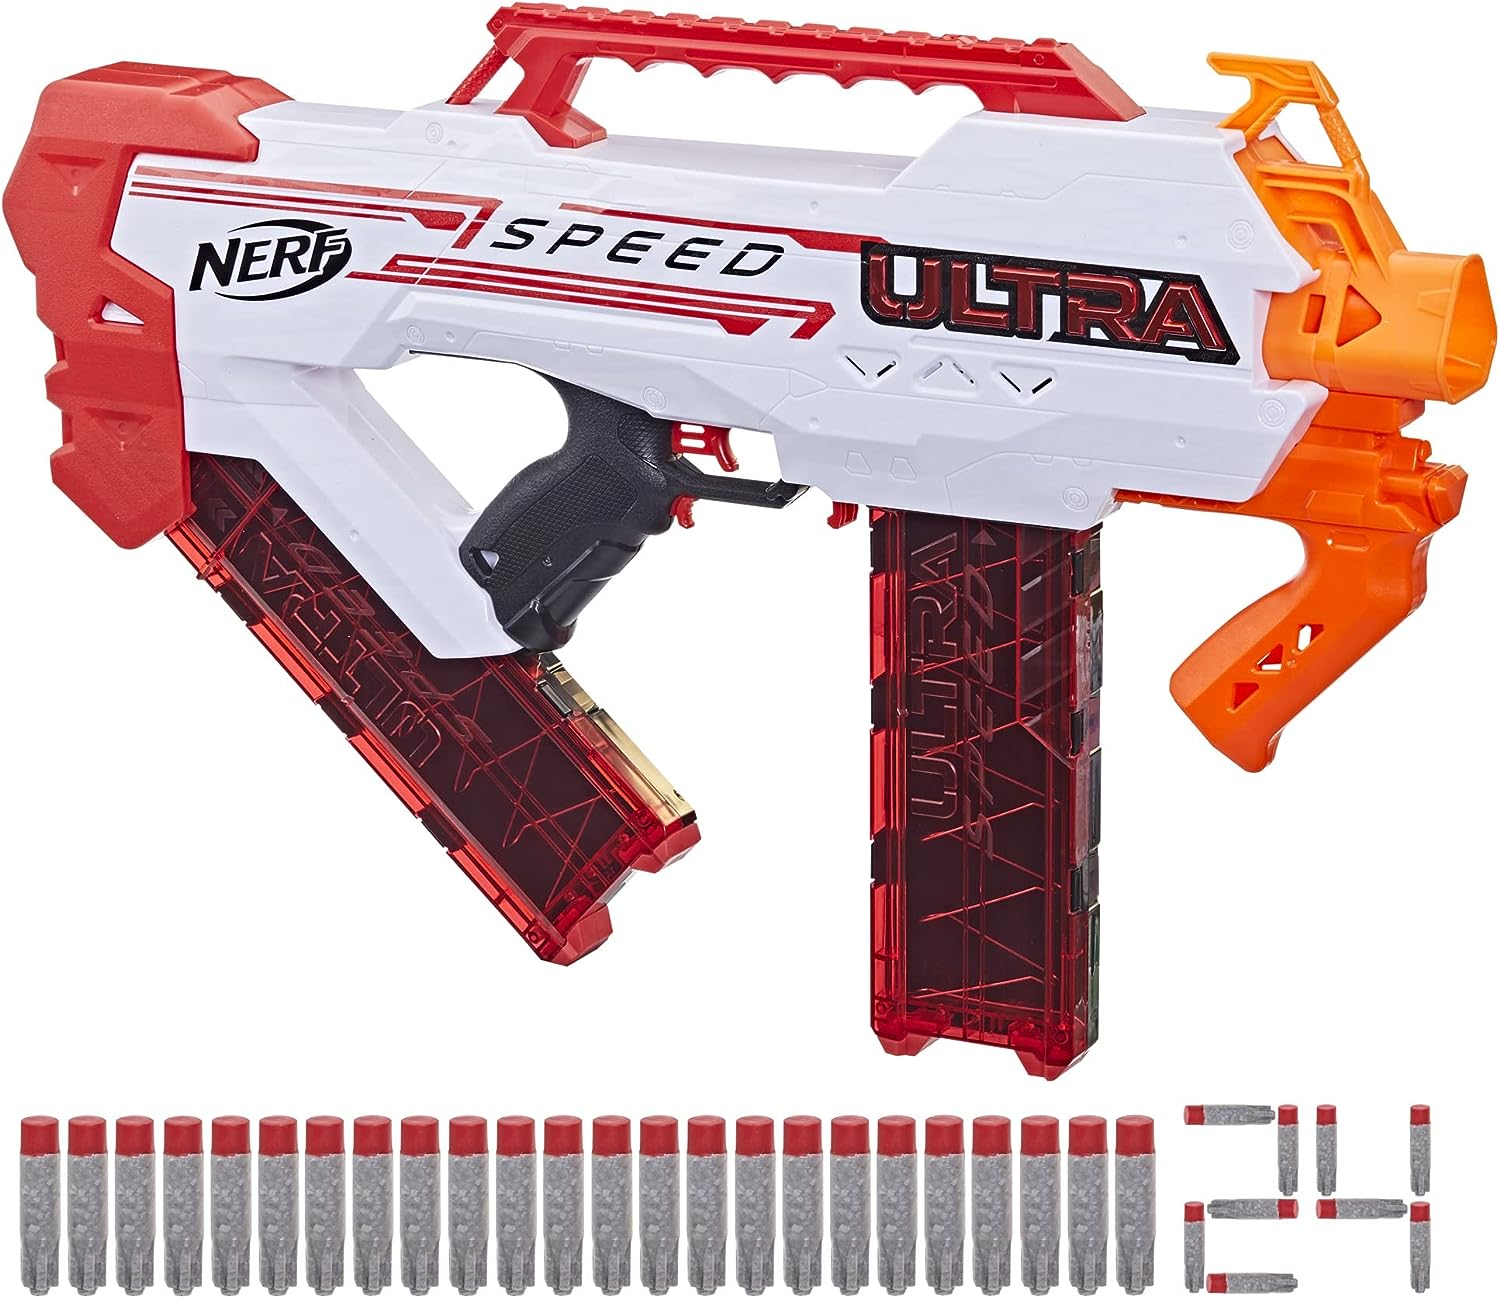 Nerf Ultra Speed Fully Motorized Blaster, Fastest Firing Nerf Ultra Blaster, 24 Nerf AccuStrike Ultra Darts, Uses Only Nerf Ultra Darts